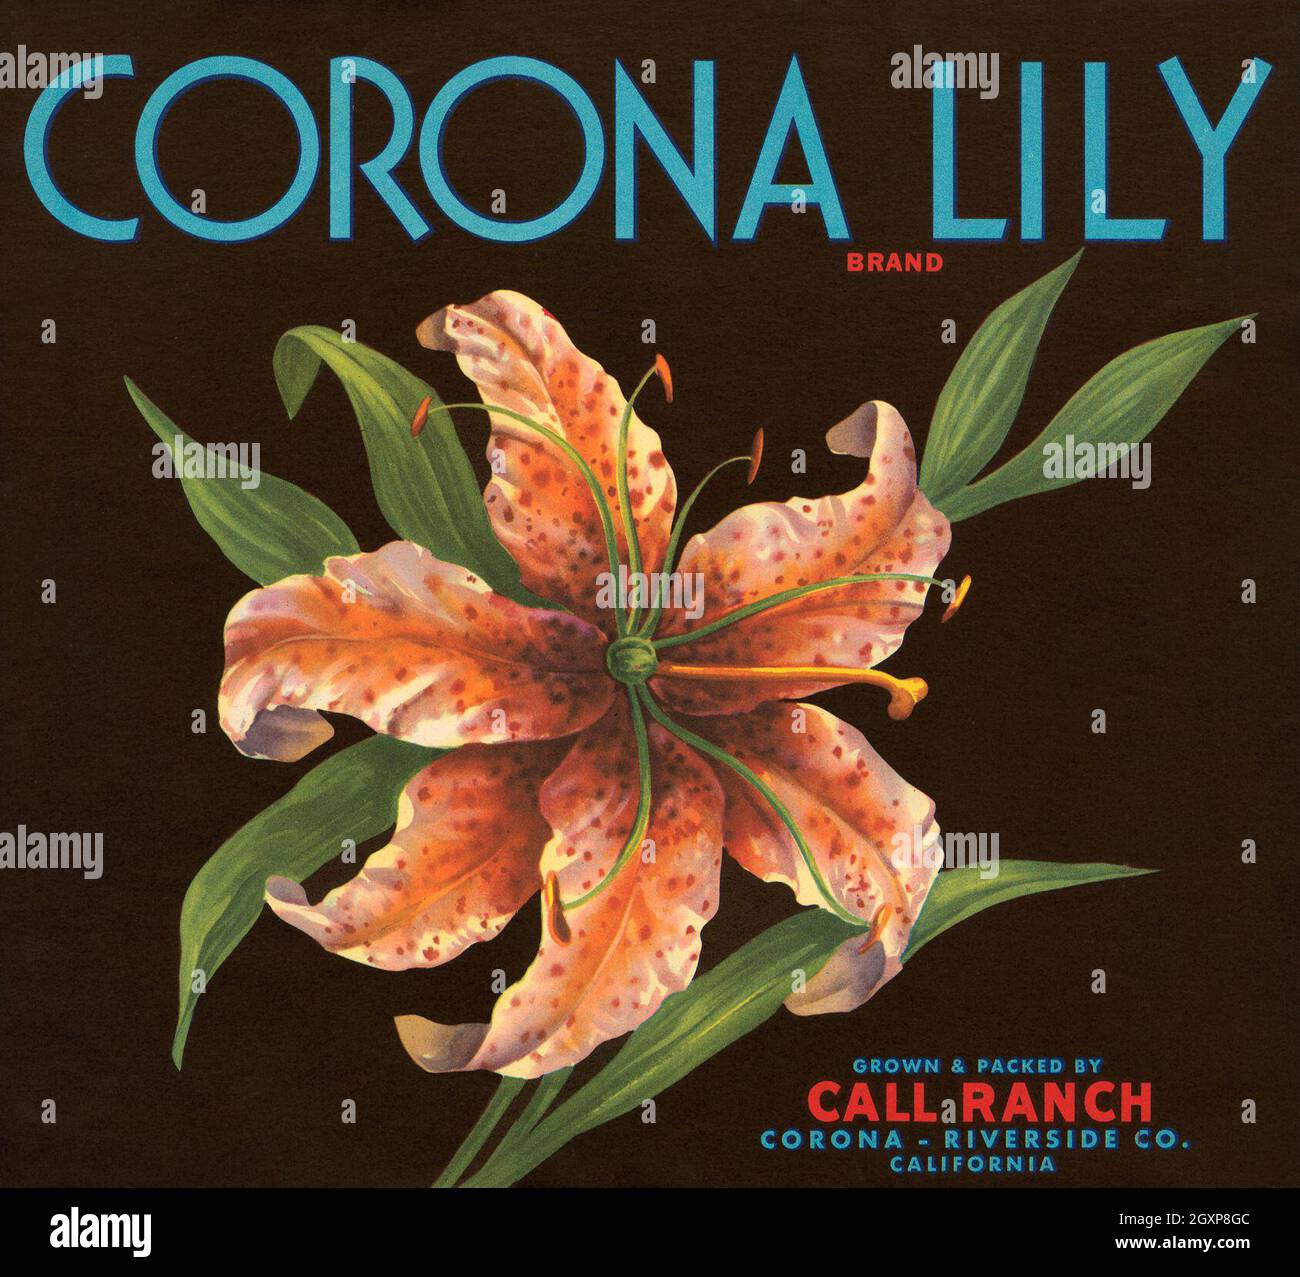 Corona Lily Brand Stock Photo